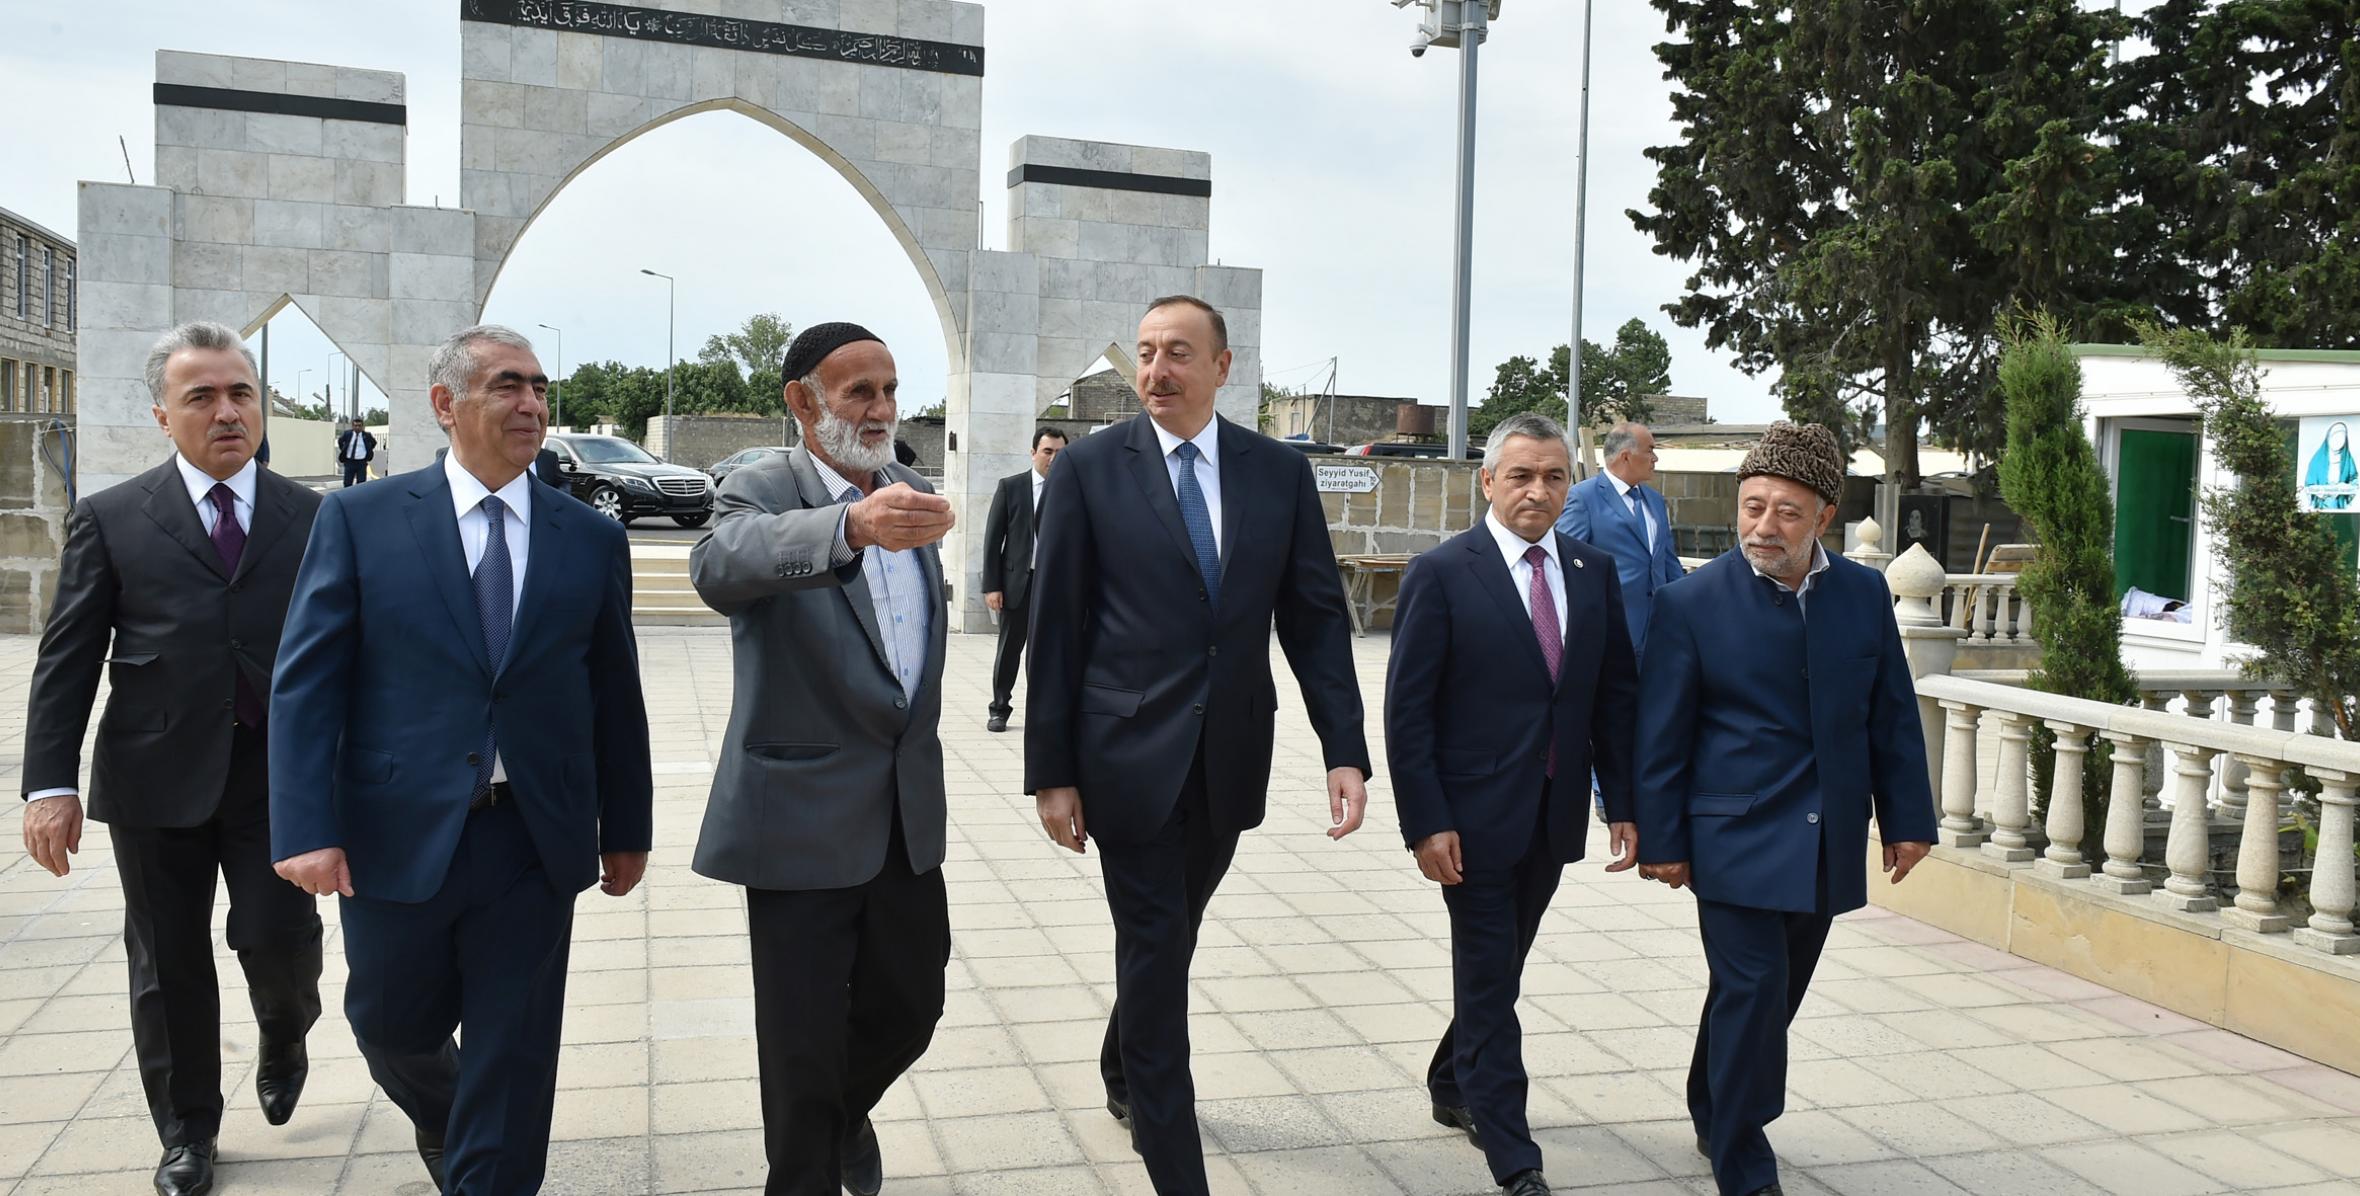 Ilham Aliyev visited Rahima Khanim Mosque-Shrine in Nardaran